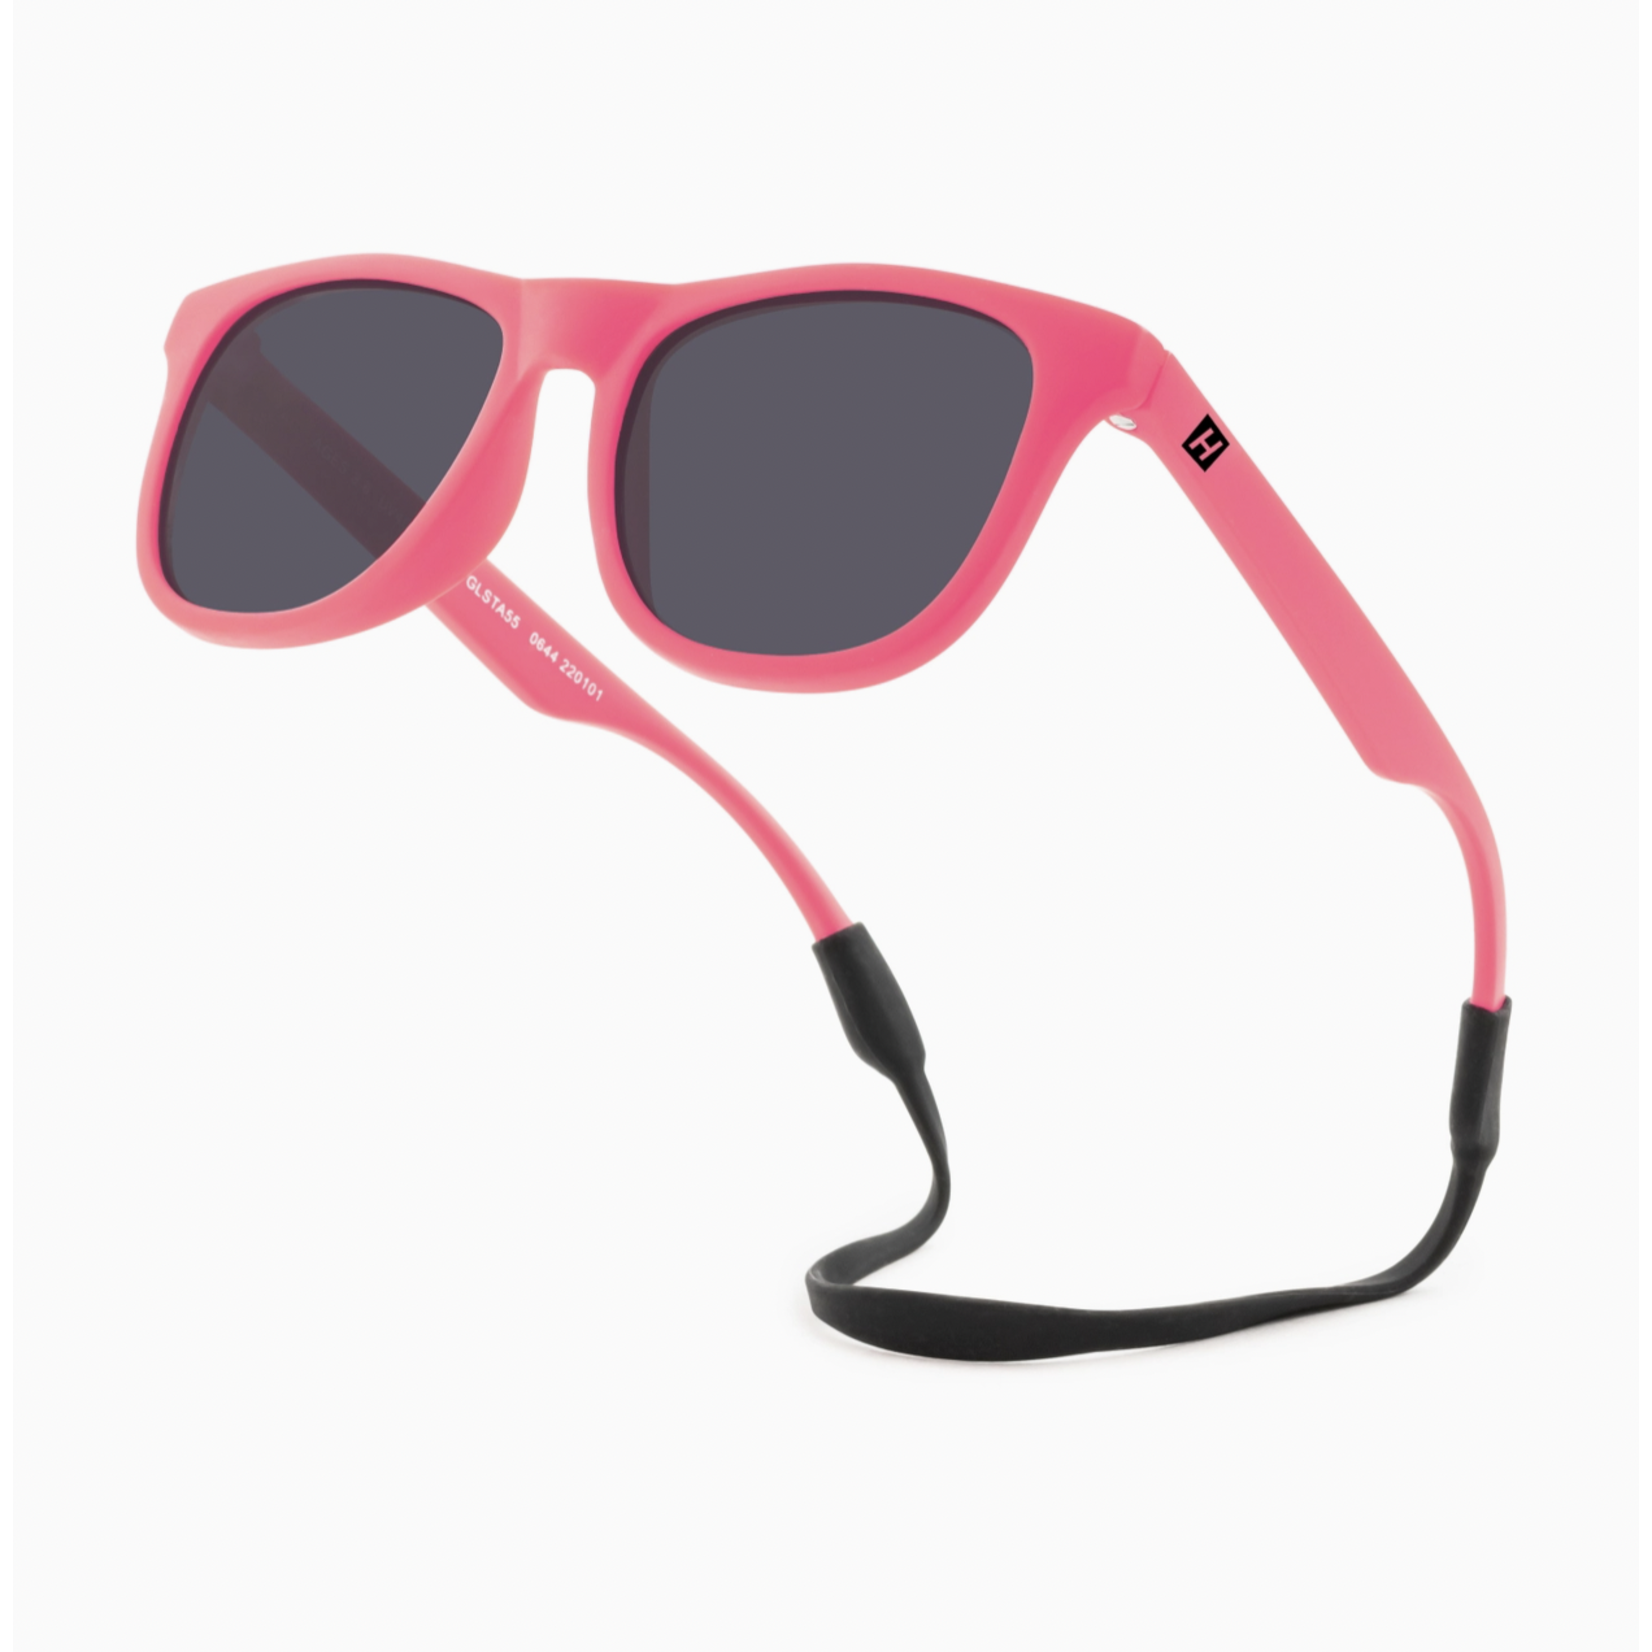 Hipsterkid Classics Sunglasses-Pink